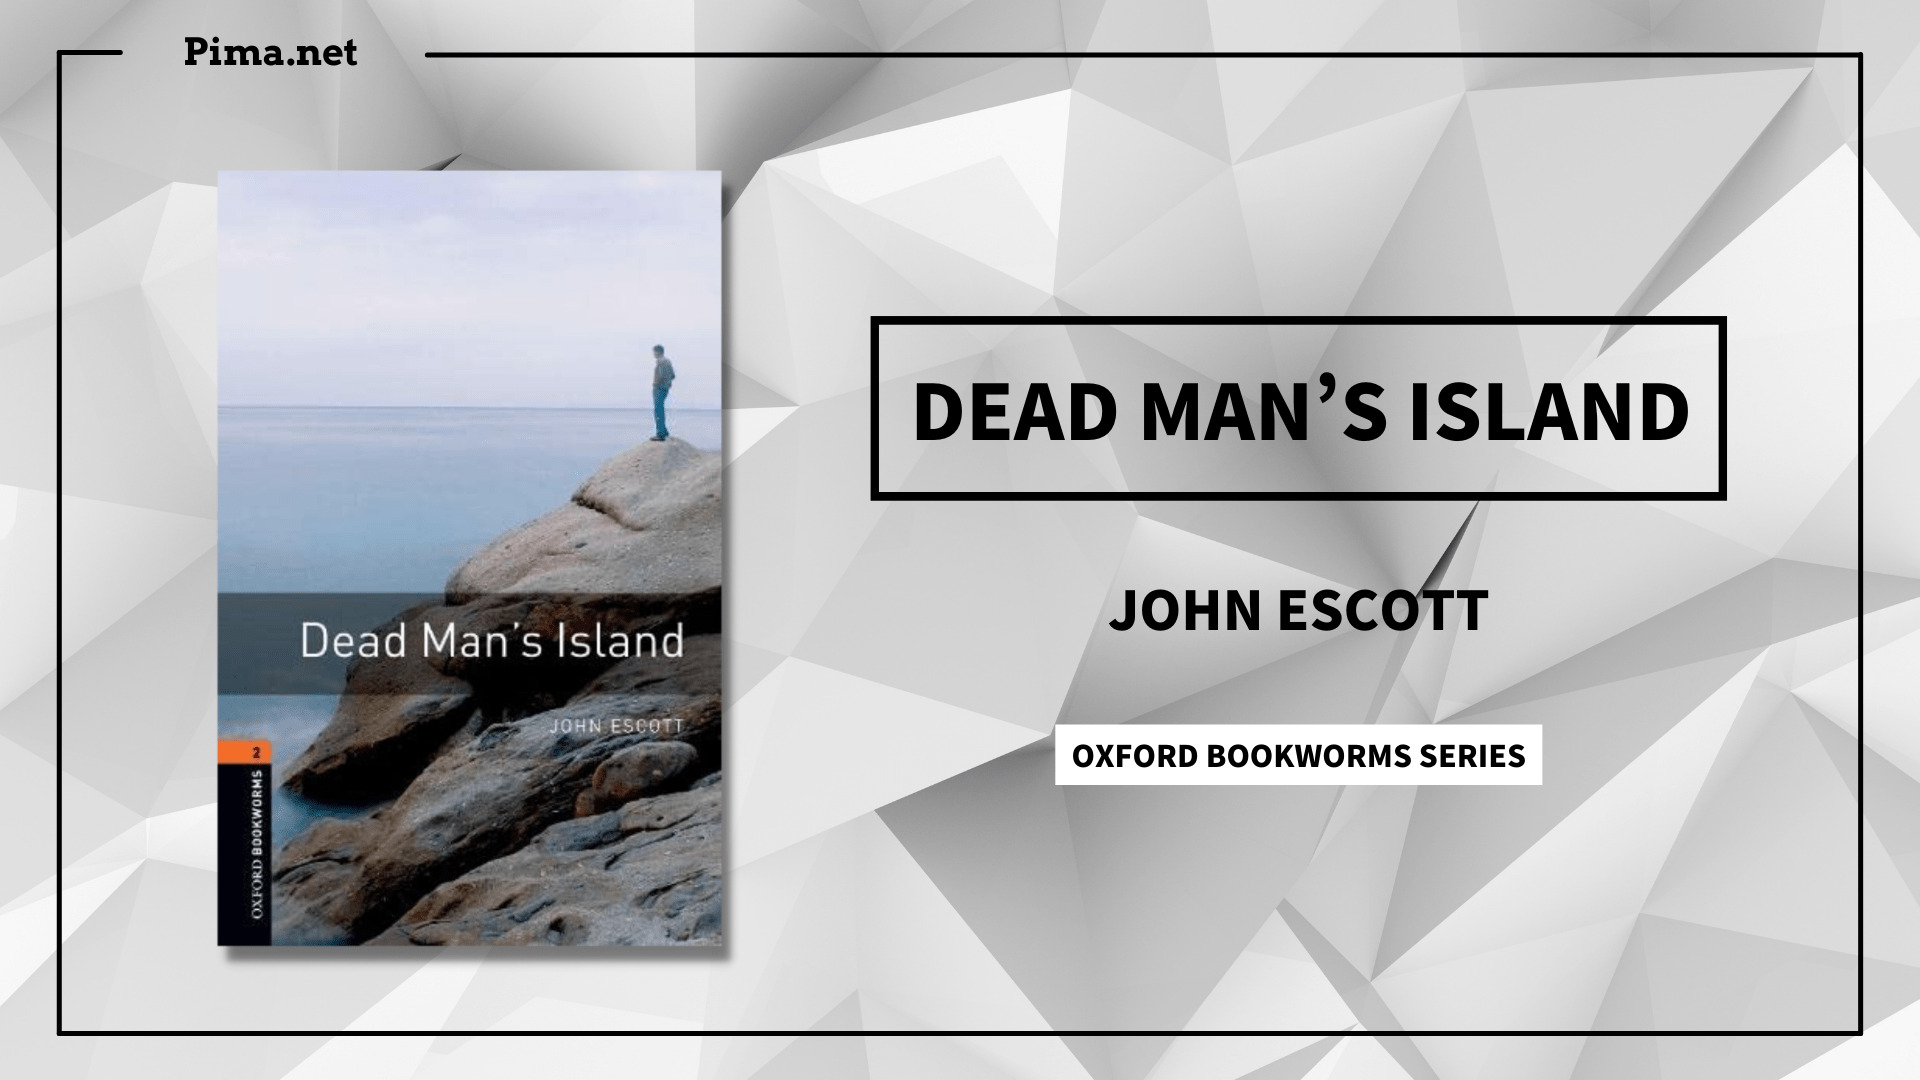 Dead Man's Island